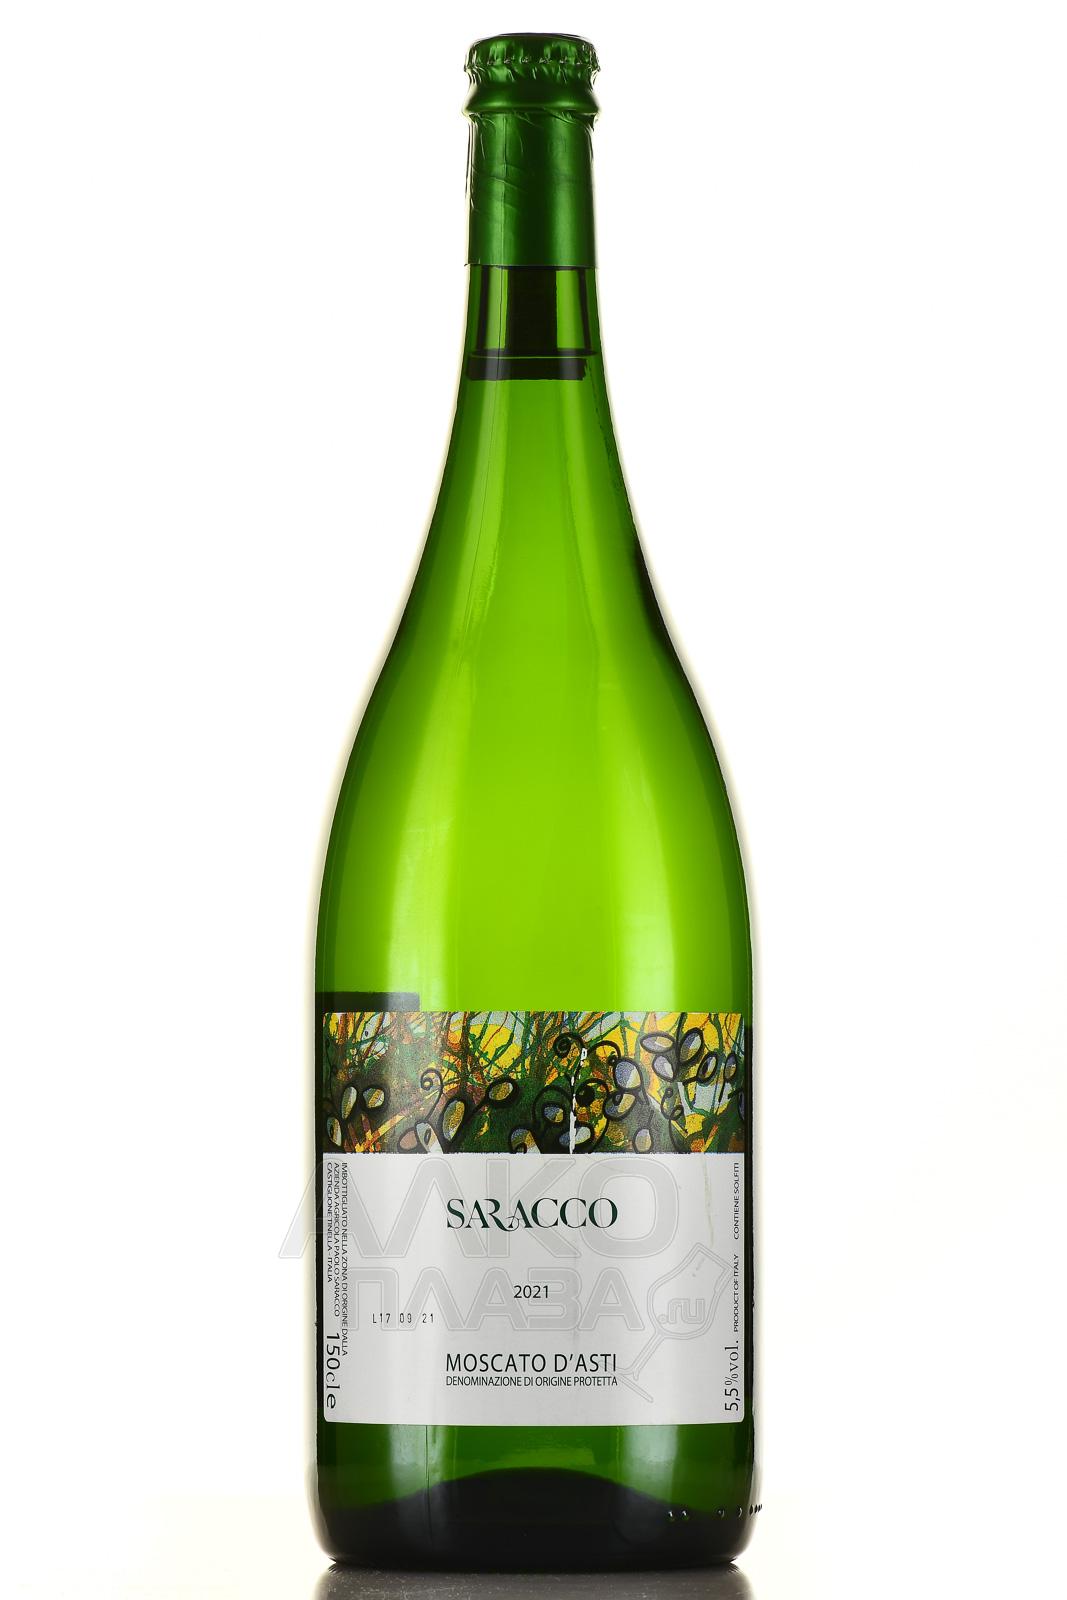 Saracco Moscato d’Asti - вино игристое Саракко Москато д’Асти 1.5 л белое сладкое